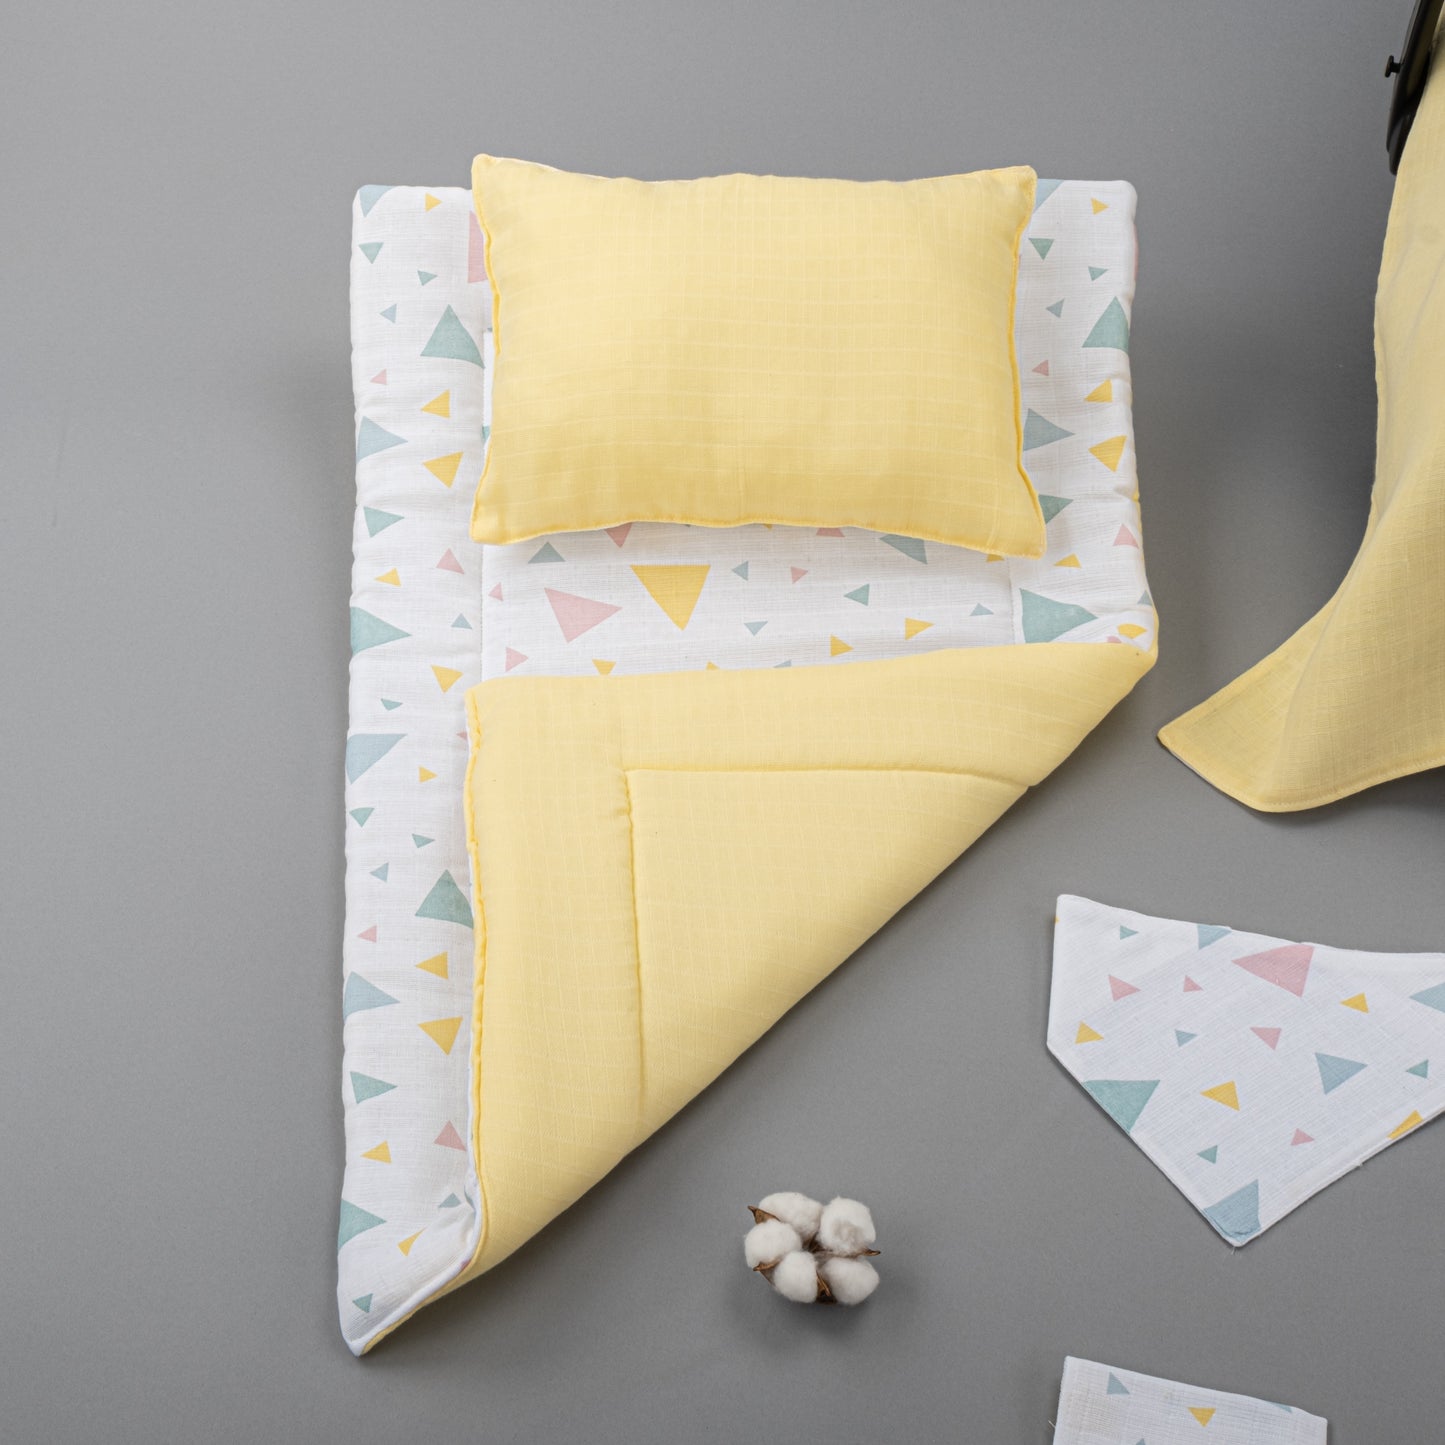 10 Piece - Newborn Sets - Seasonal - Yellow Muslin - Colored Triangles